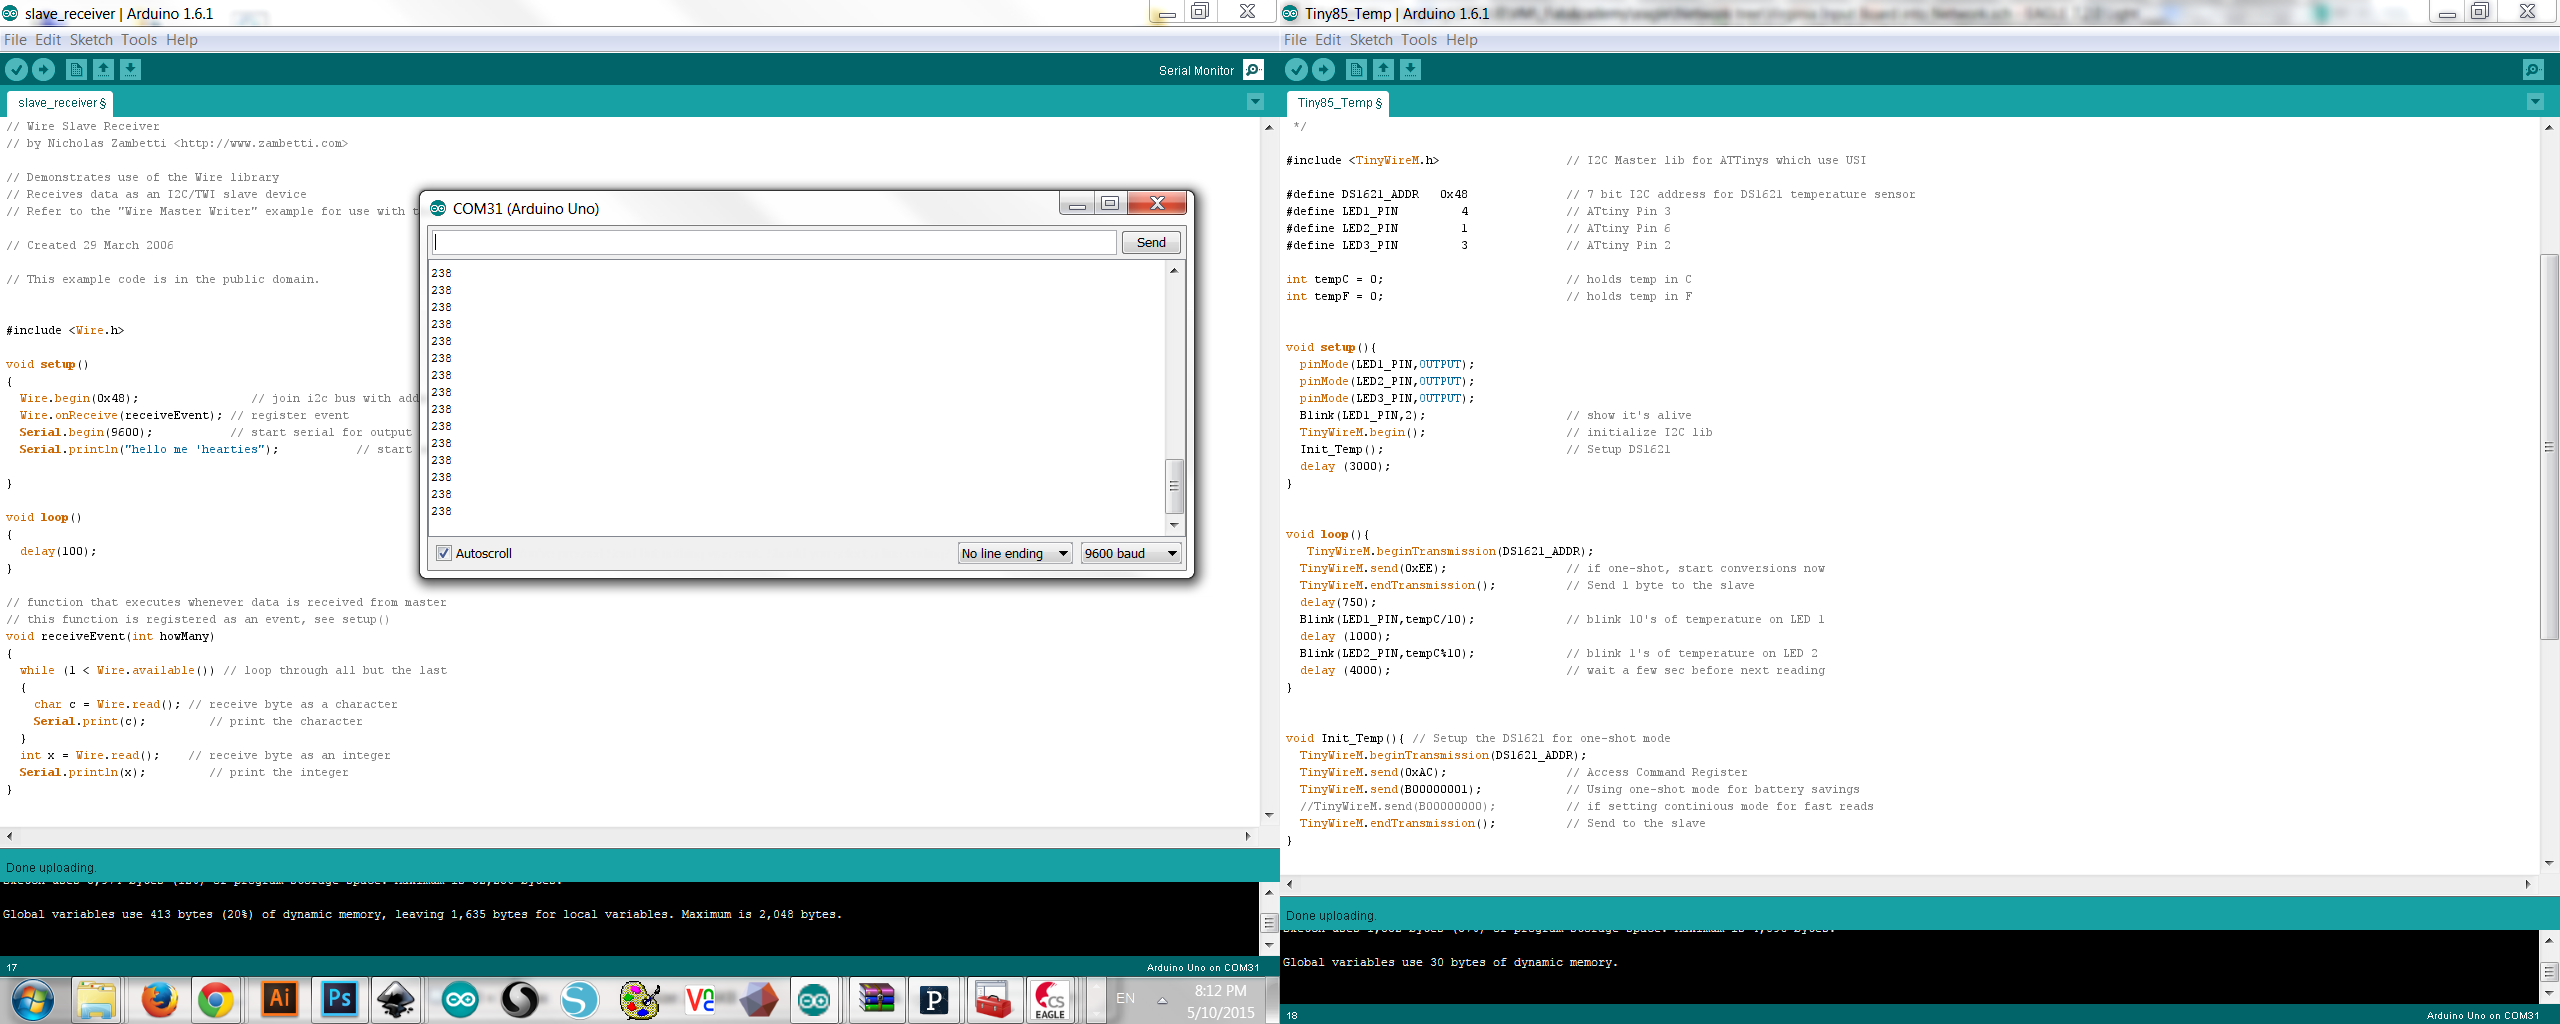 Squid! program working. Photo of arduino IDE code and communication happening.